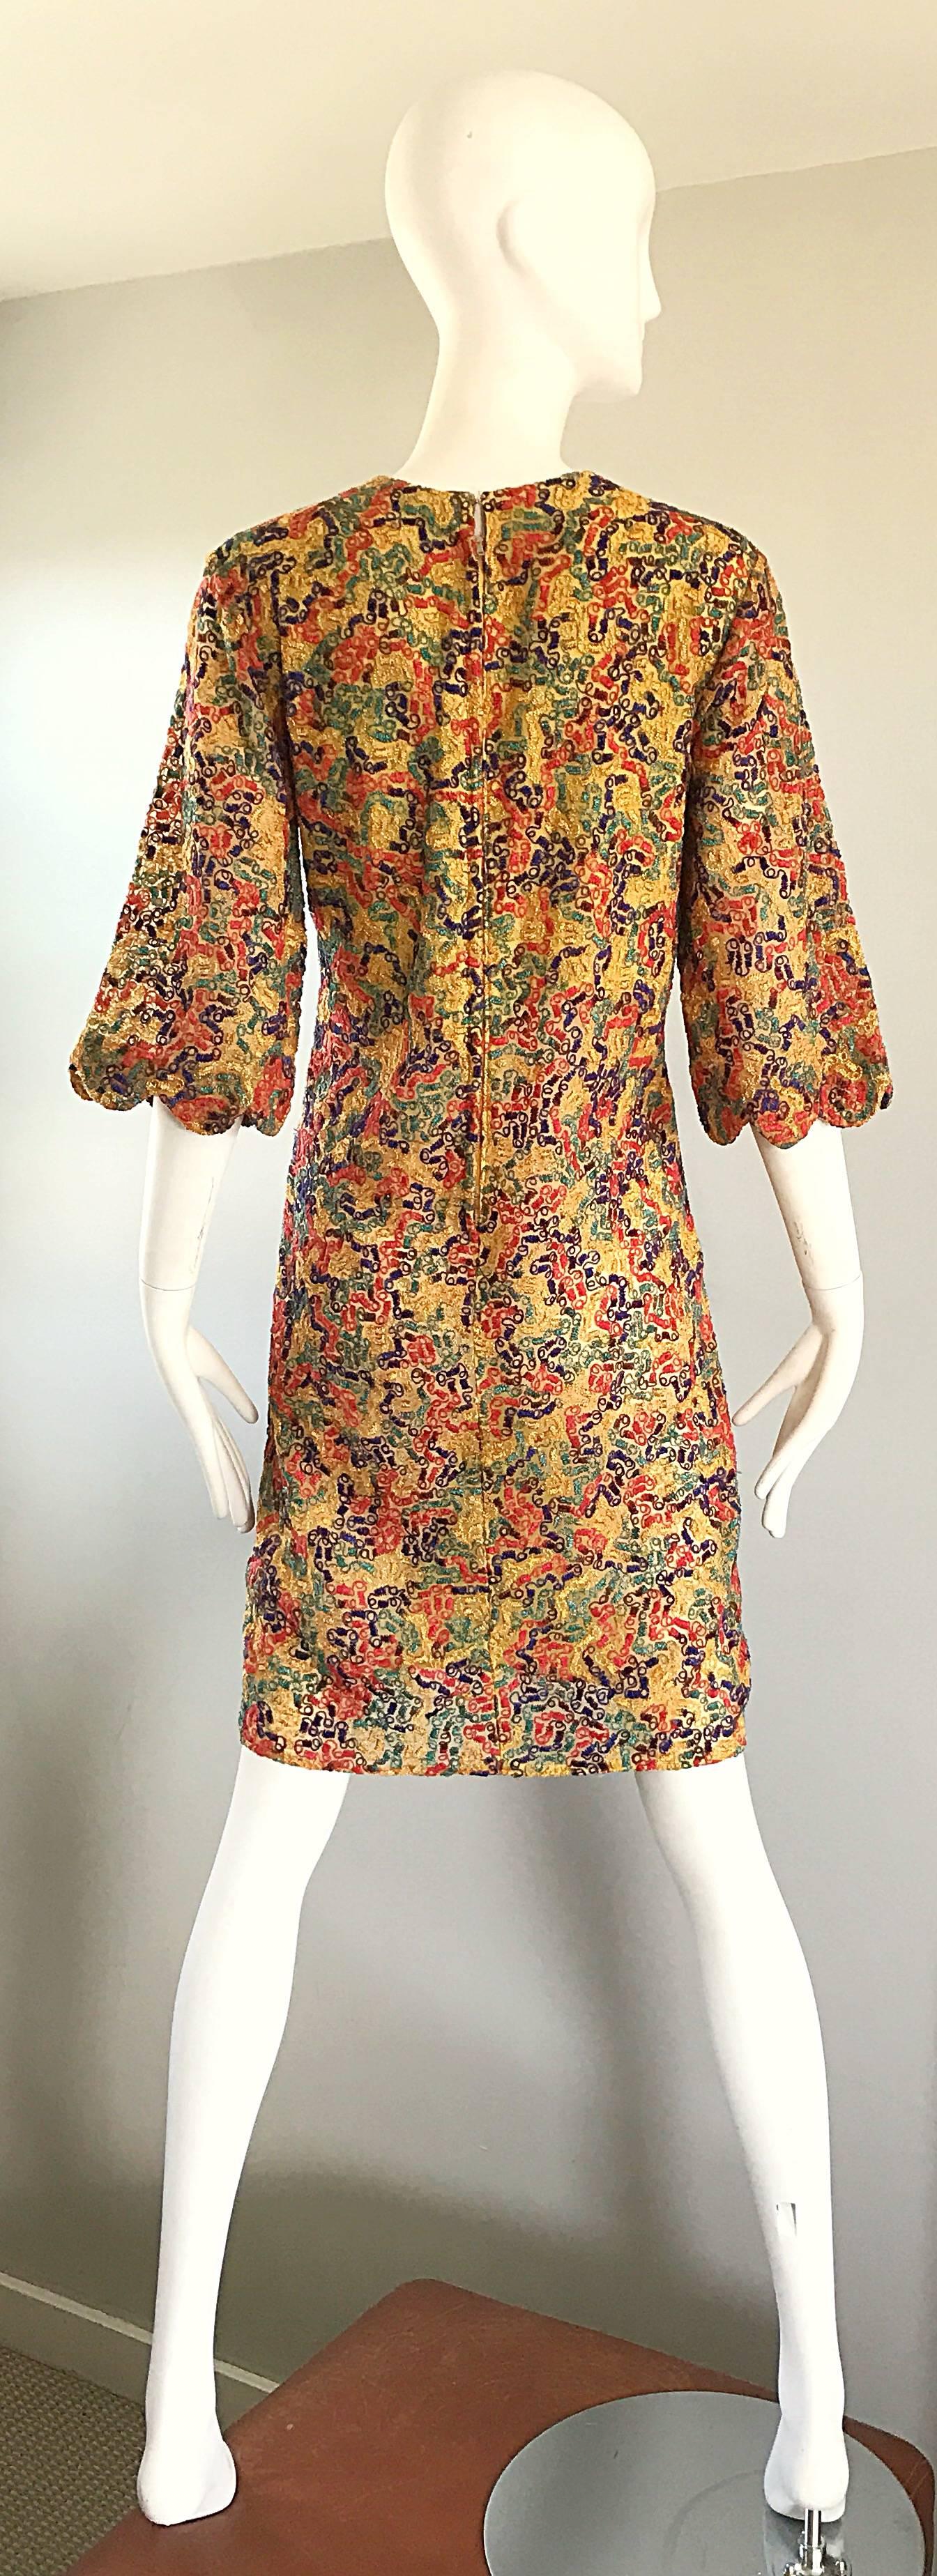 60s hooked sleeve dress